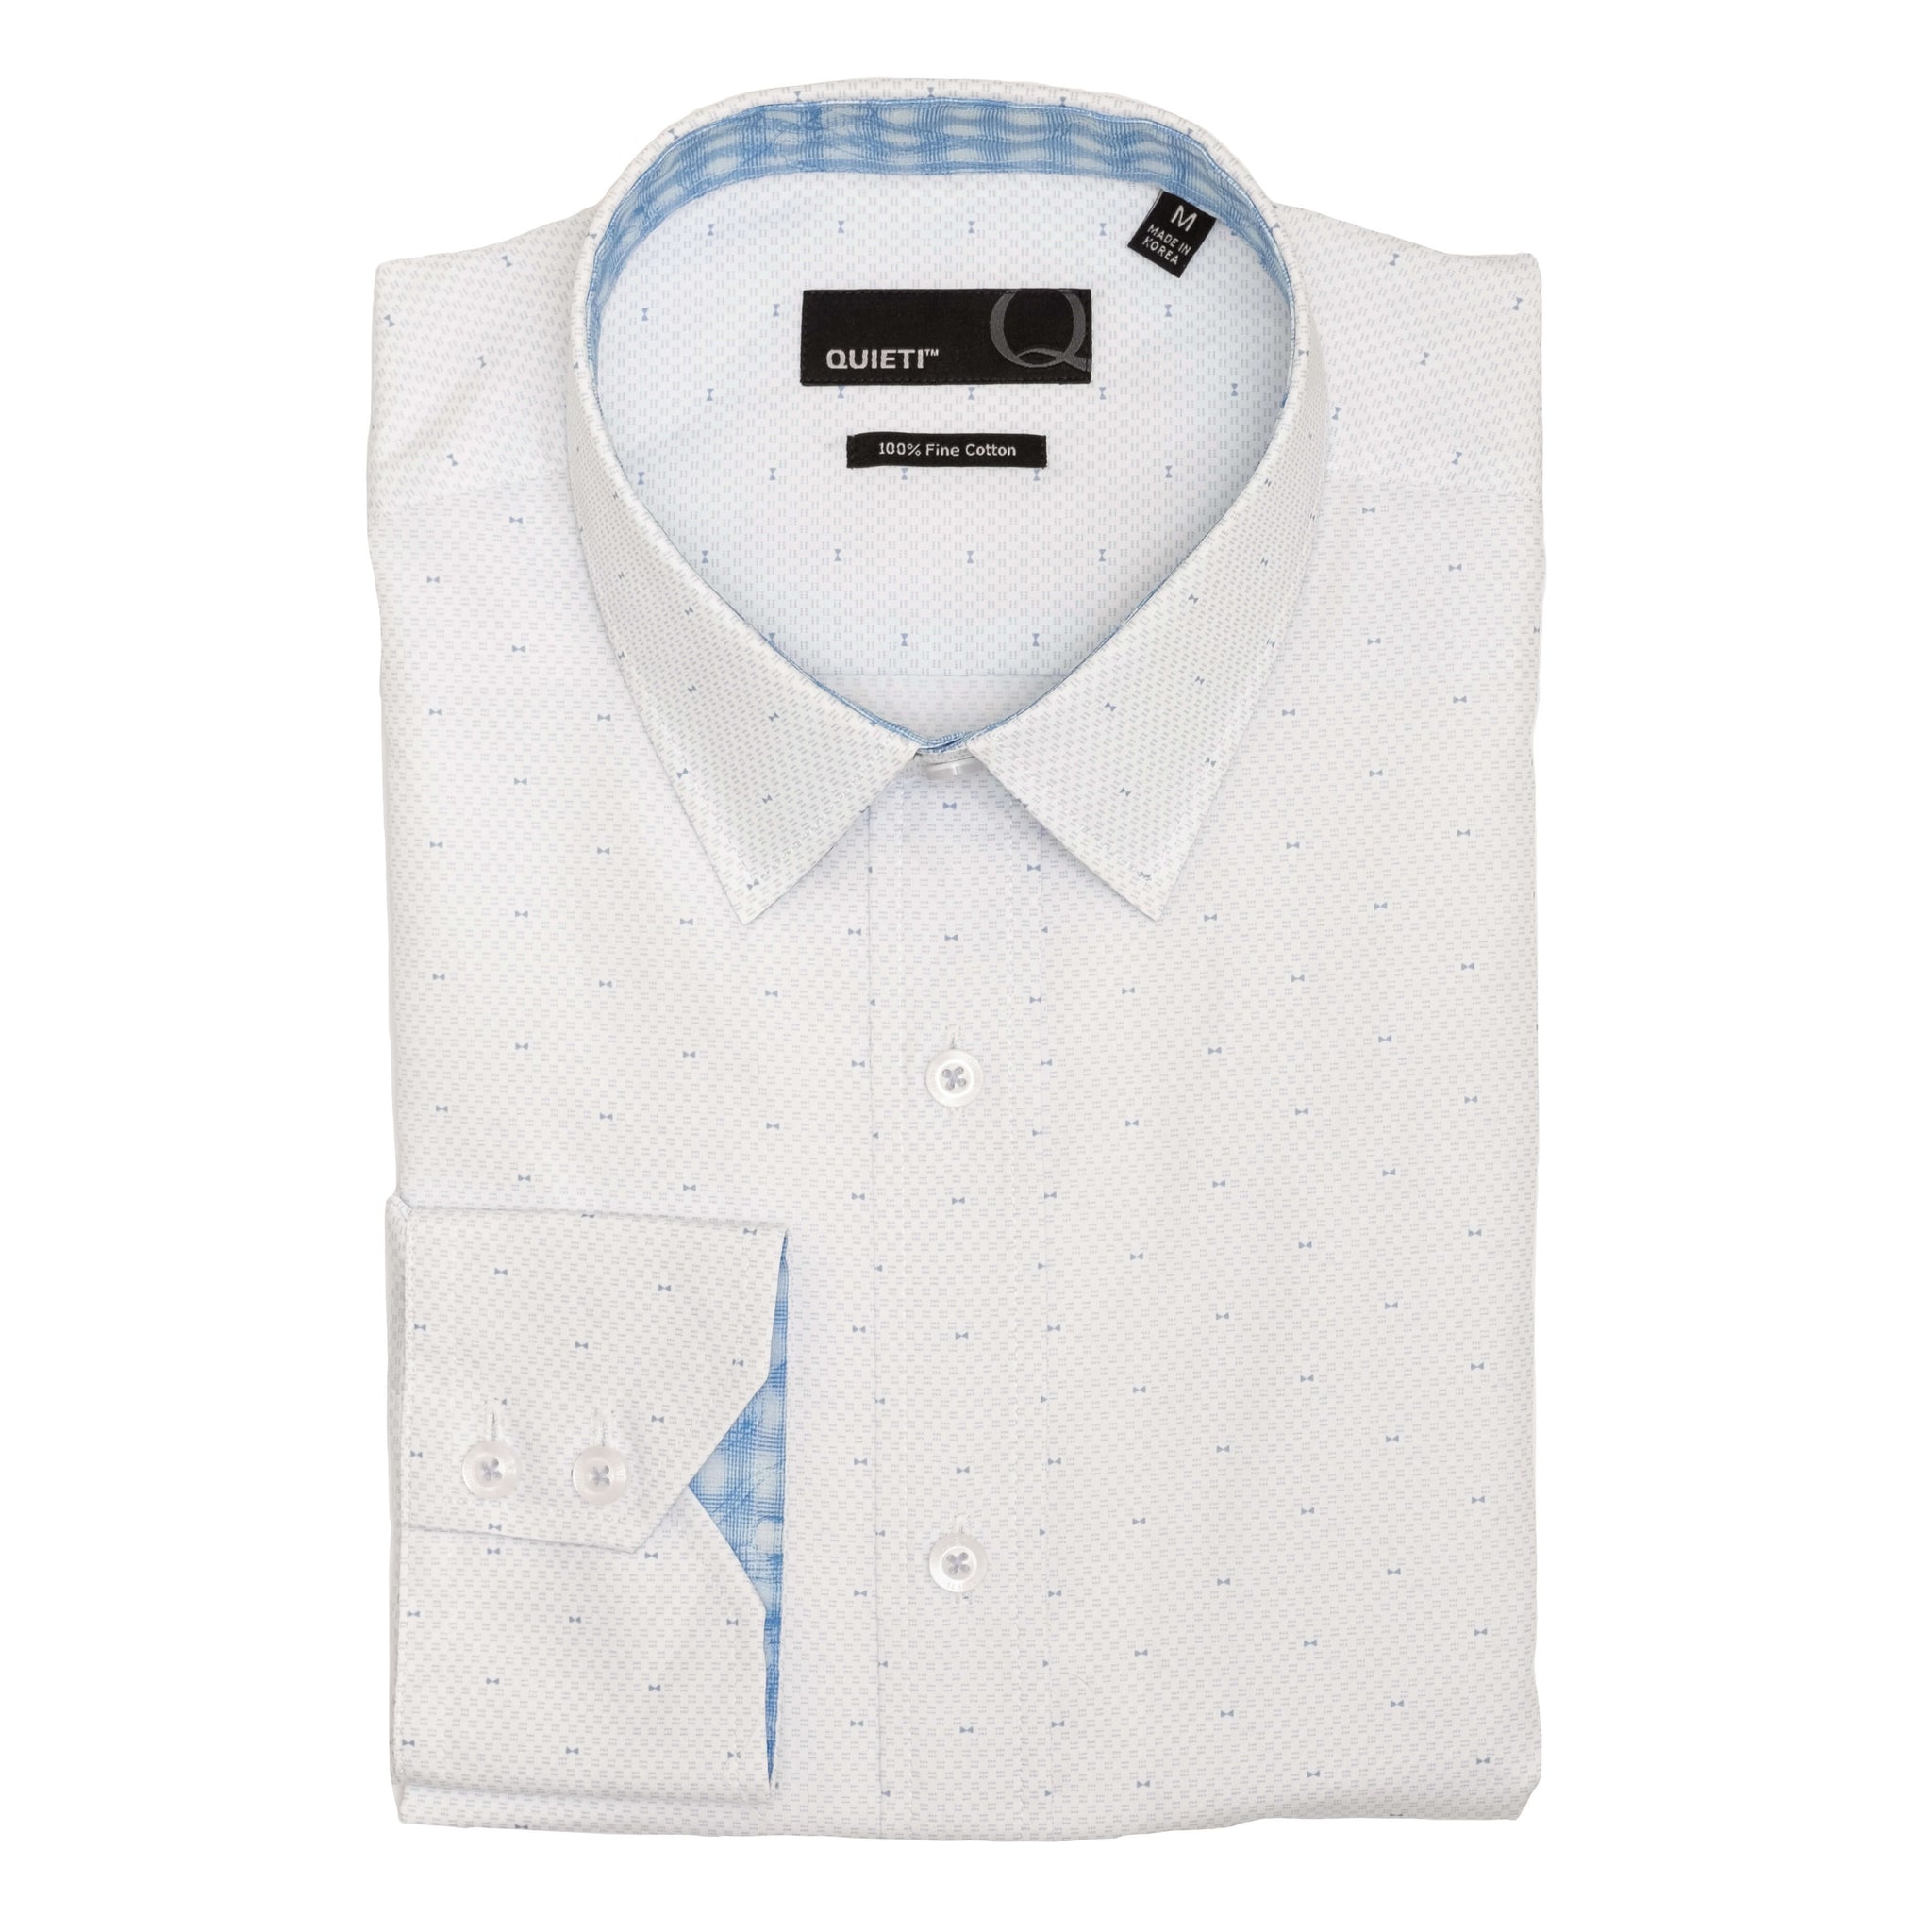 2024 beliebter Sonderpreis Riverside Men\'s Geo-Print Shirt Sleeve Long QUIETI - White